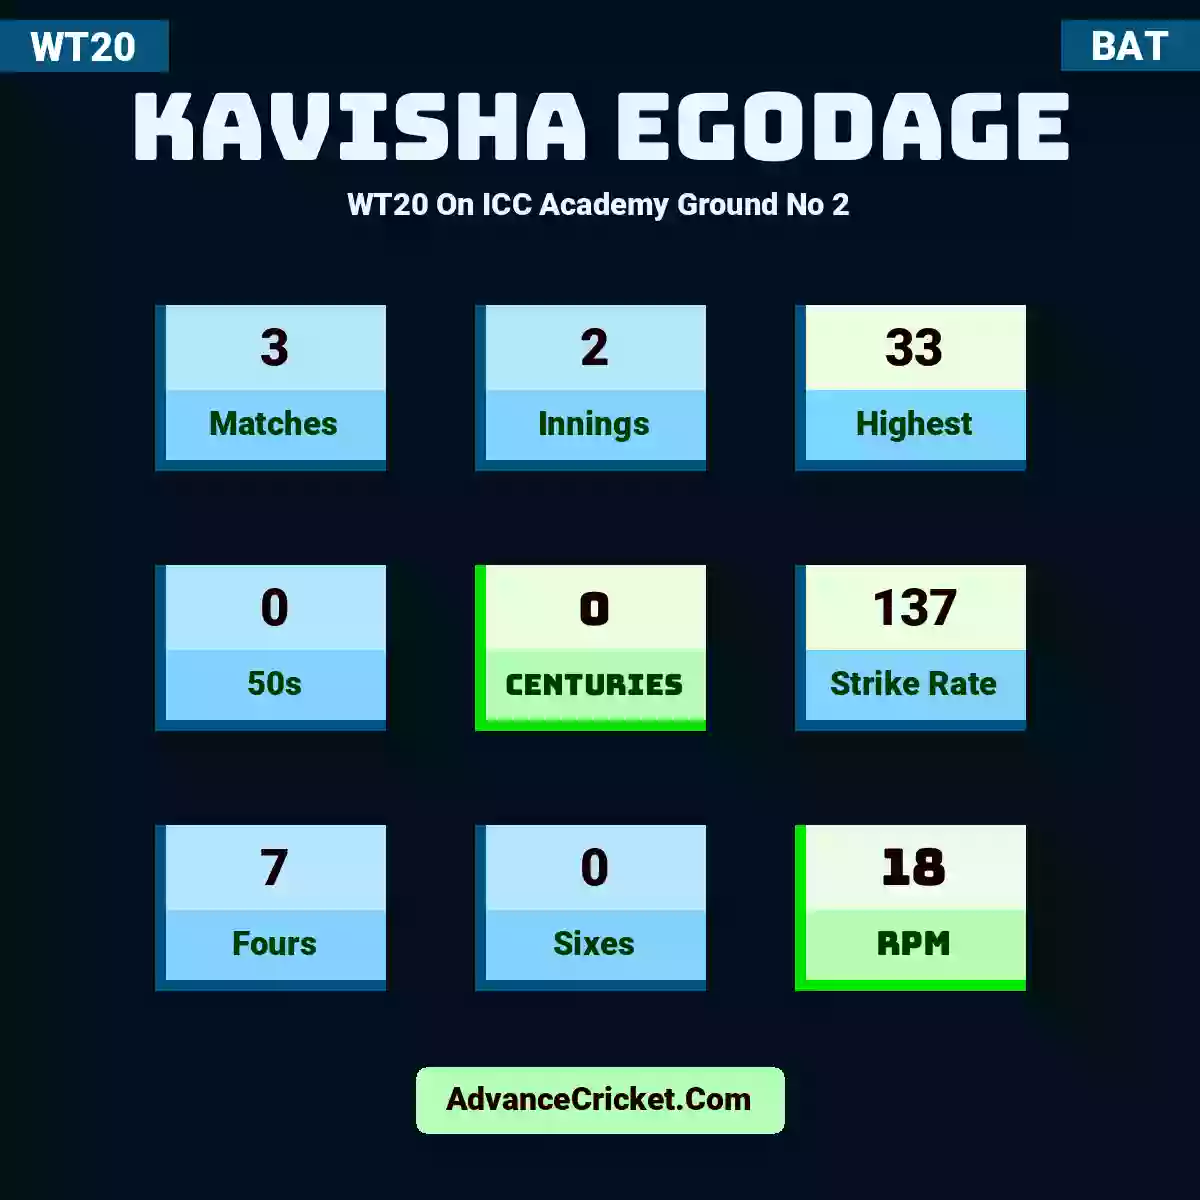 Kavisha Egodage WT20  On ICC Academy Ground No 2, Kavisha Egodage played 3 matches, scored 33 runs as highest, 0 half-centuries, and 0 centuries, with a strike rate of 137. K.Egodage hit 7 fours and 0 sixes, with an RPM of 18.